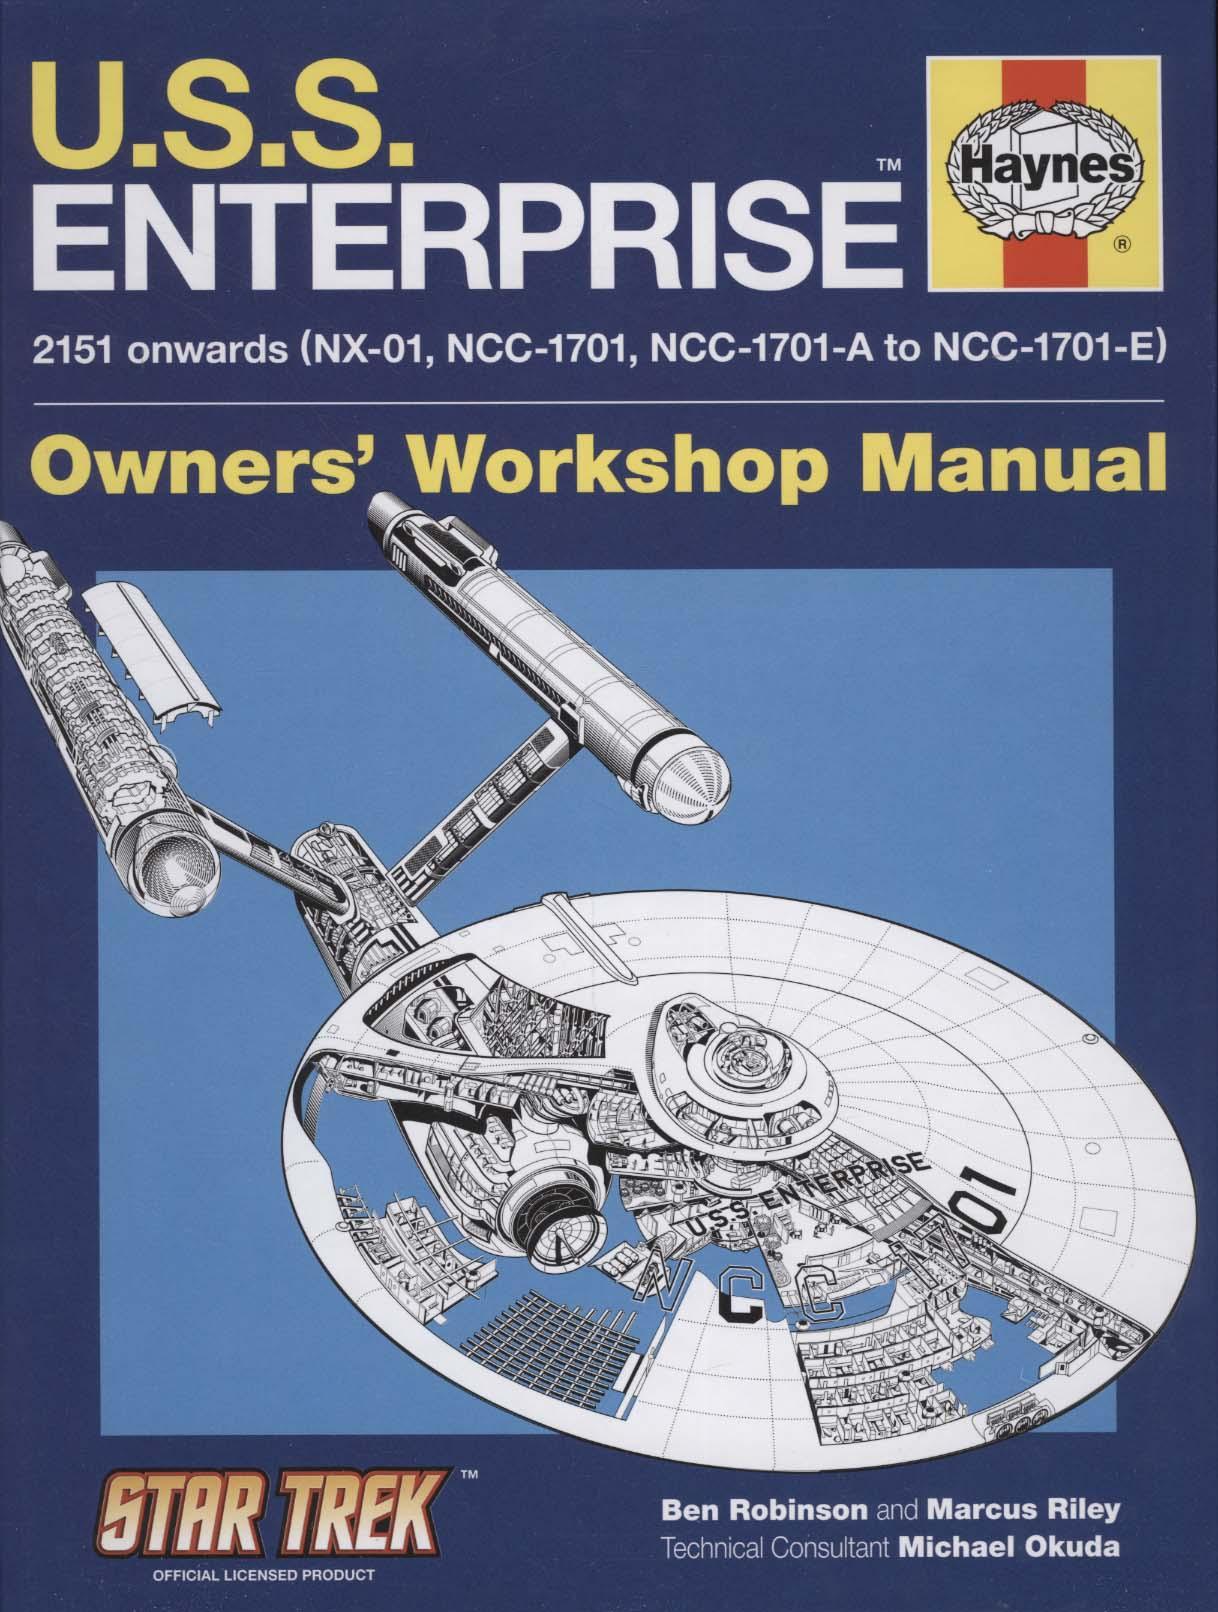 U.S.S. Enterprise Manual - Ben Robinson